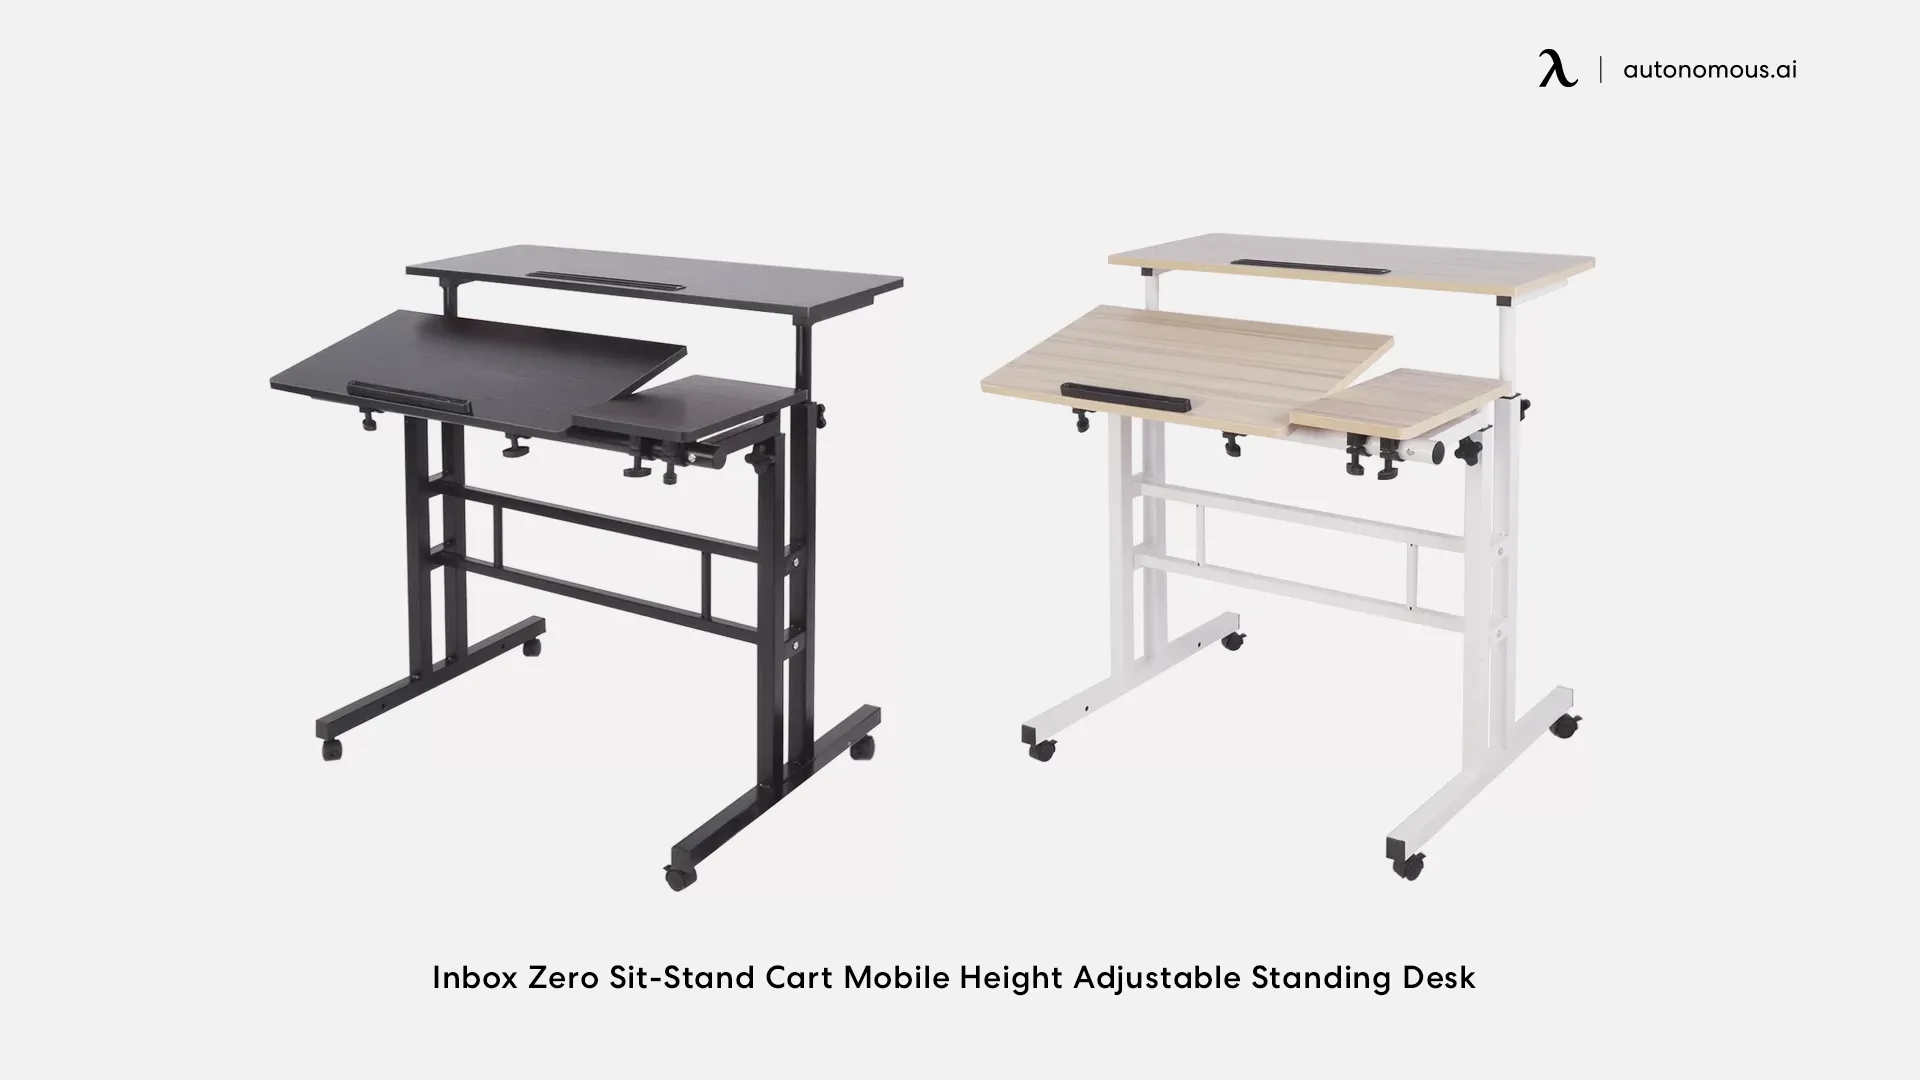 Inbox Zero Cart Desk - small work desk